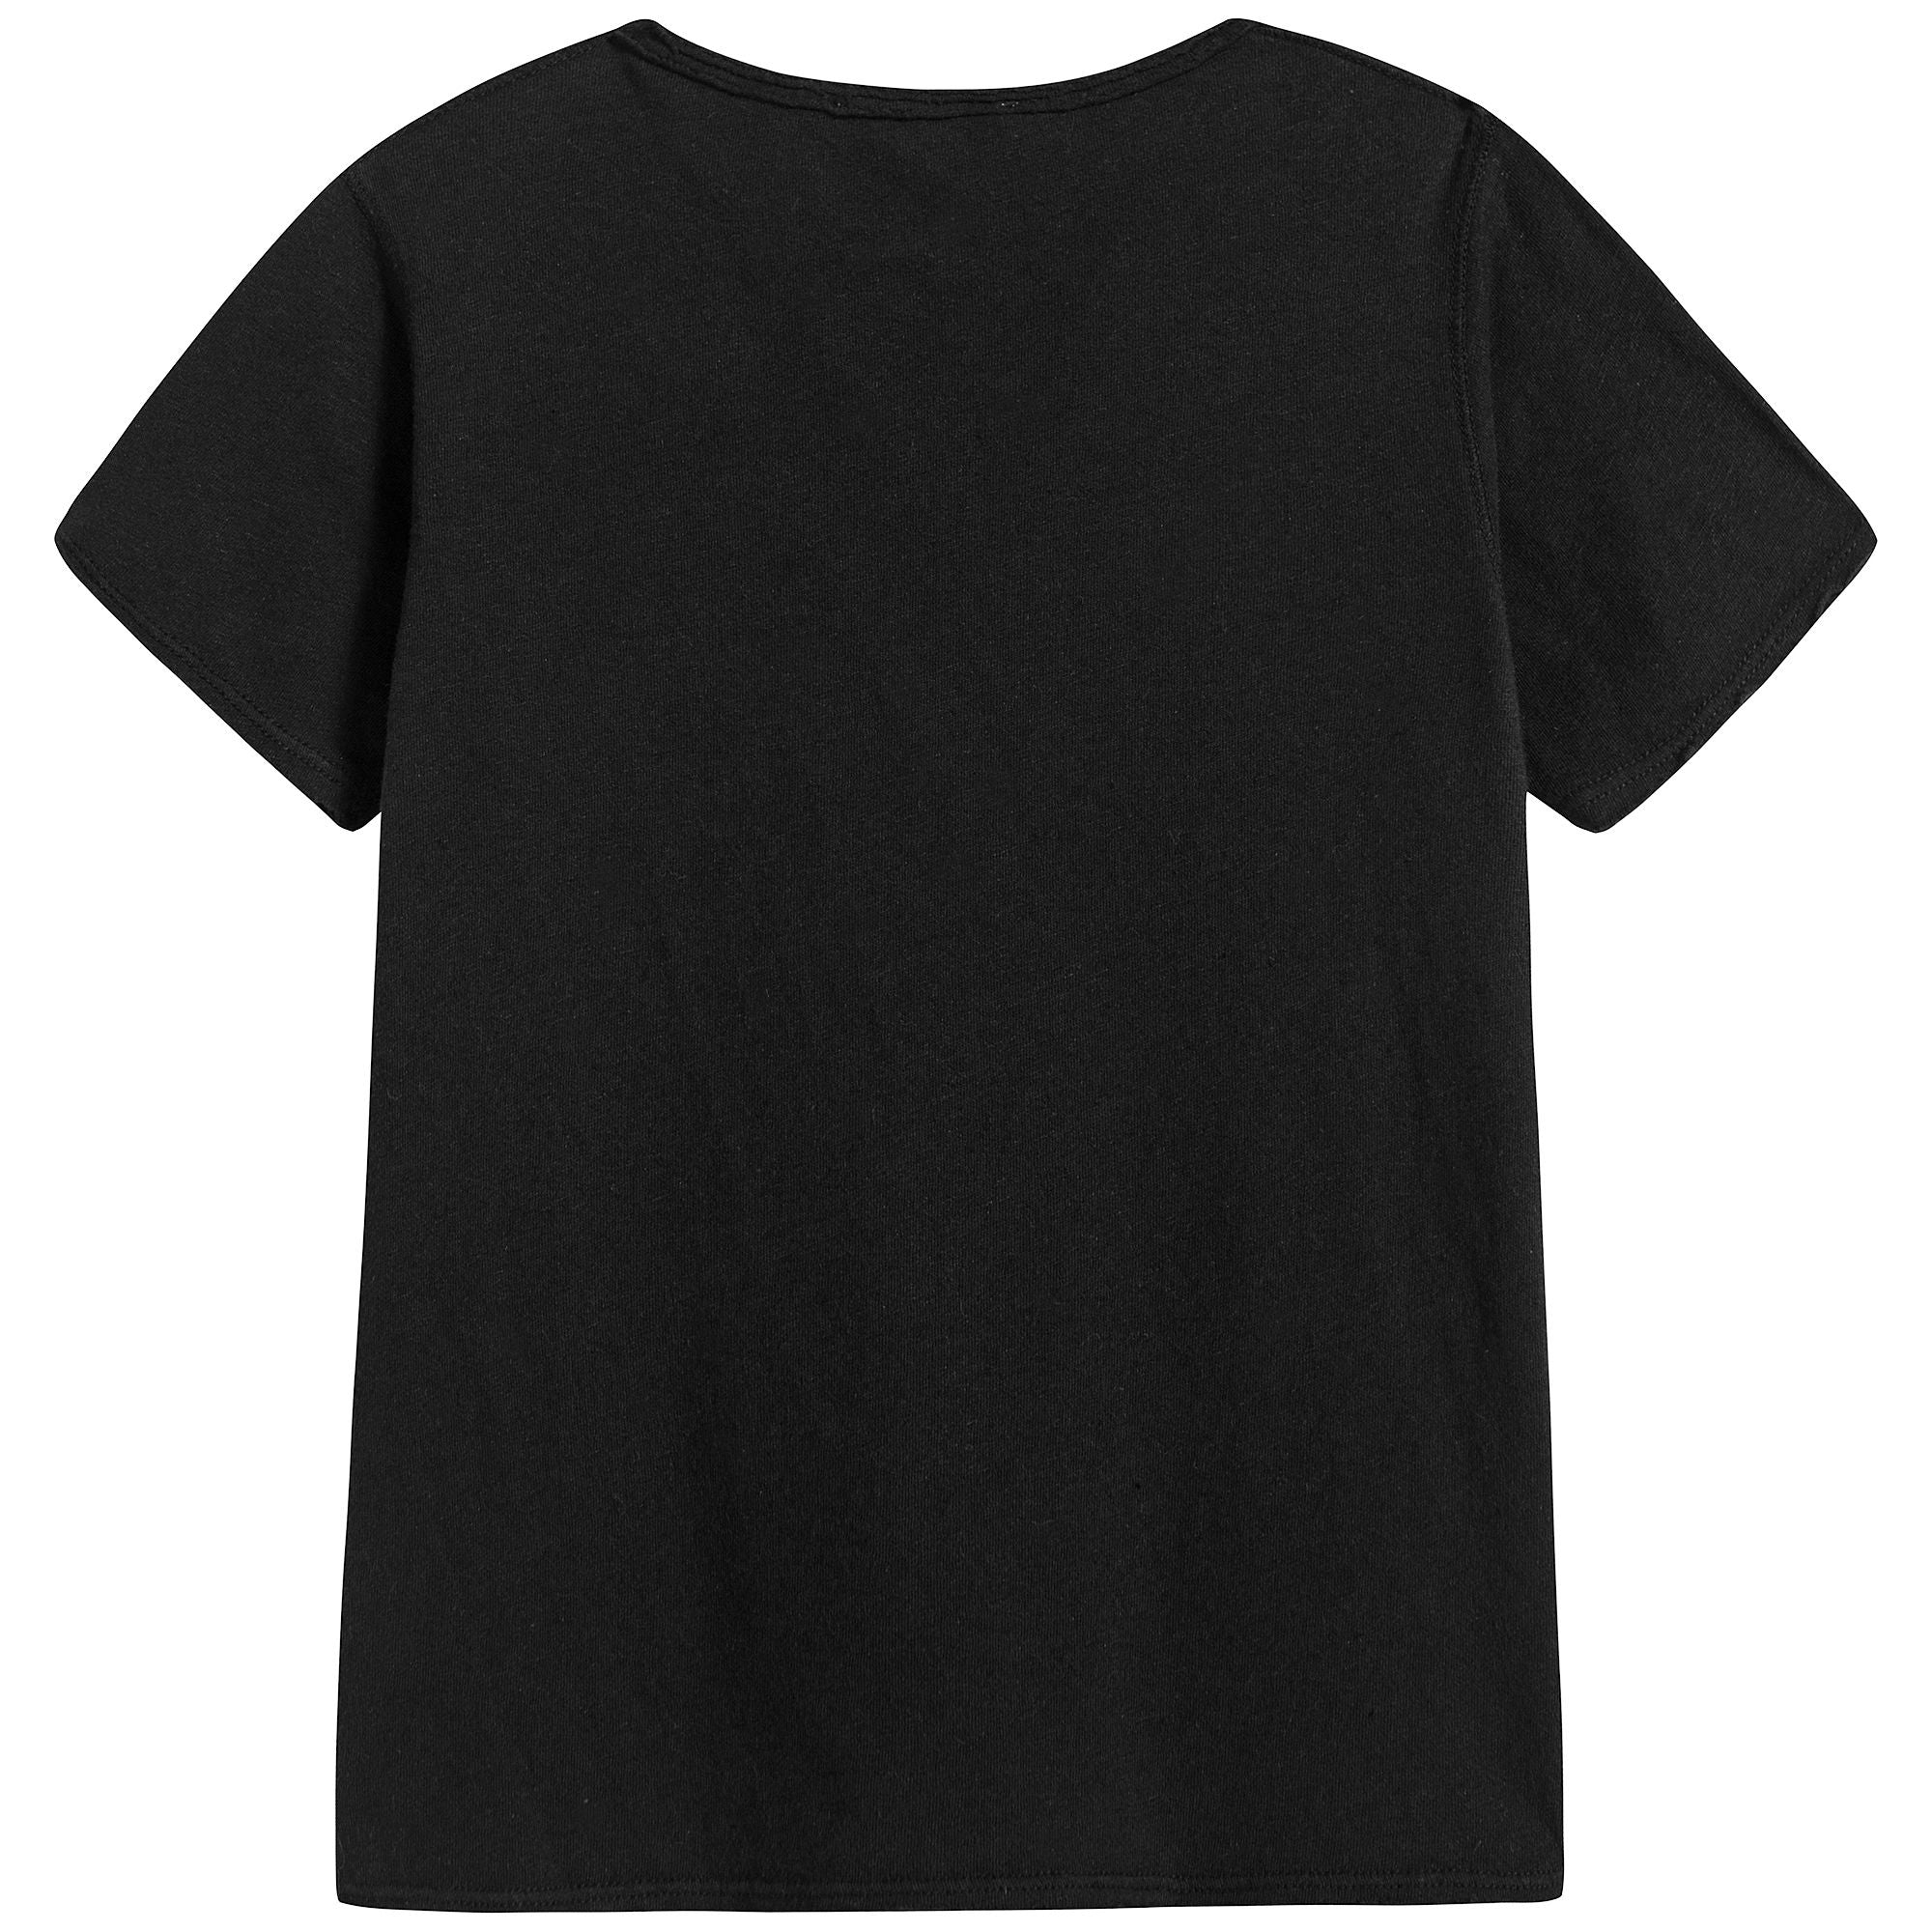 Baby Black Cotton T-shirt